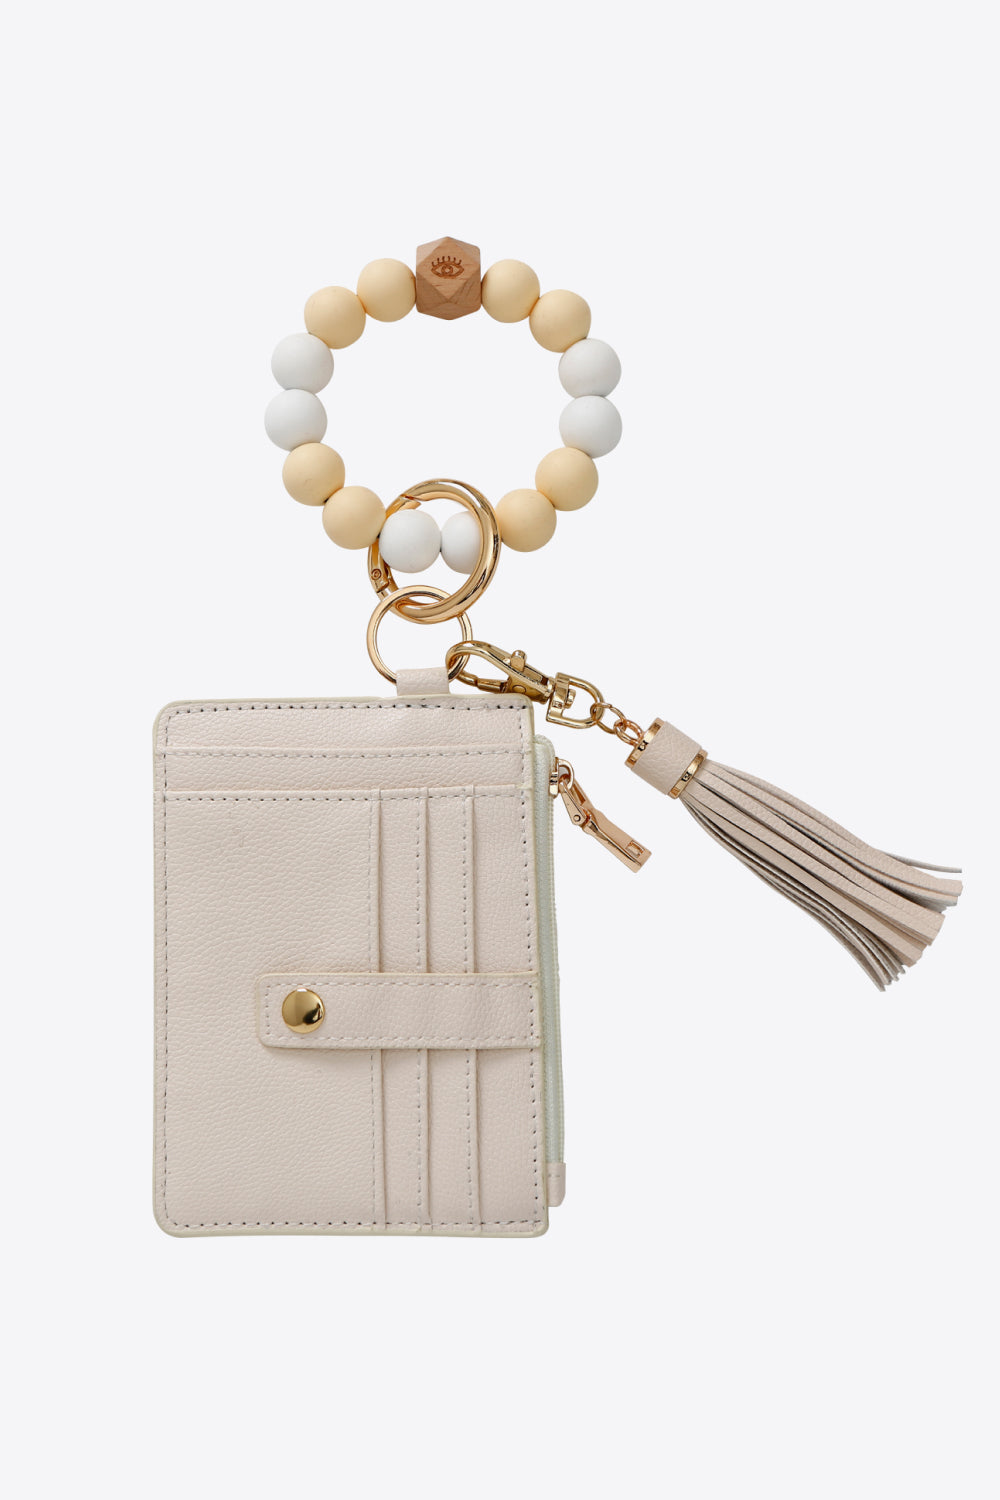 Boho Beaded Bracelet Keychain with Wallet